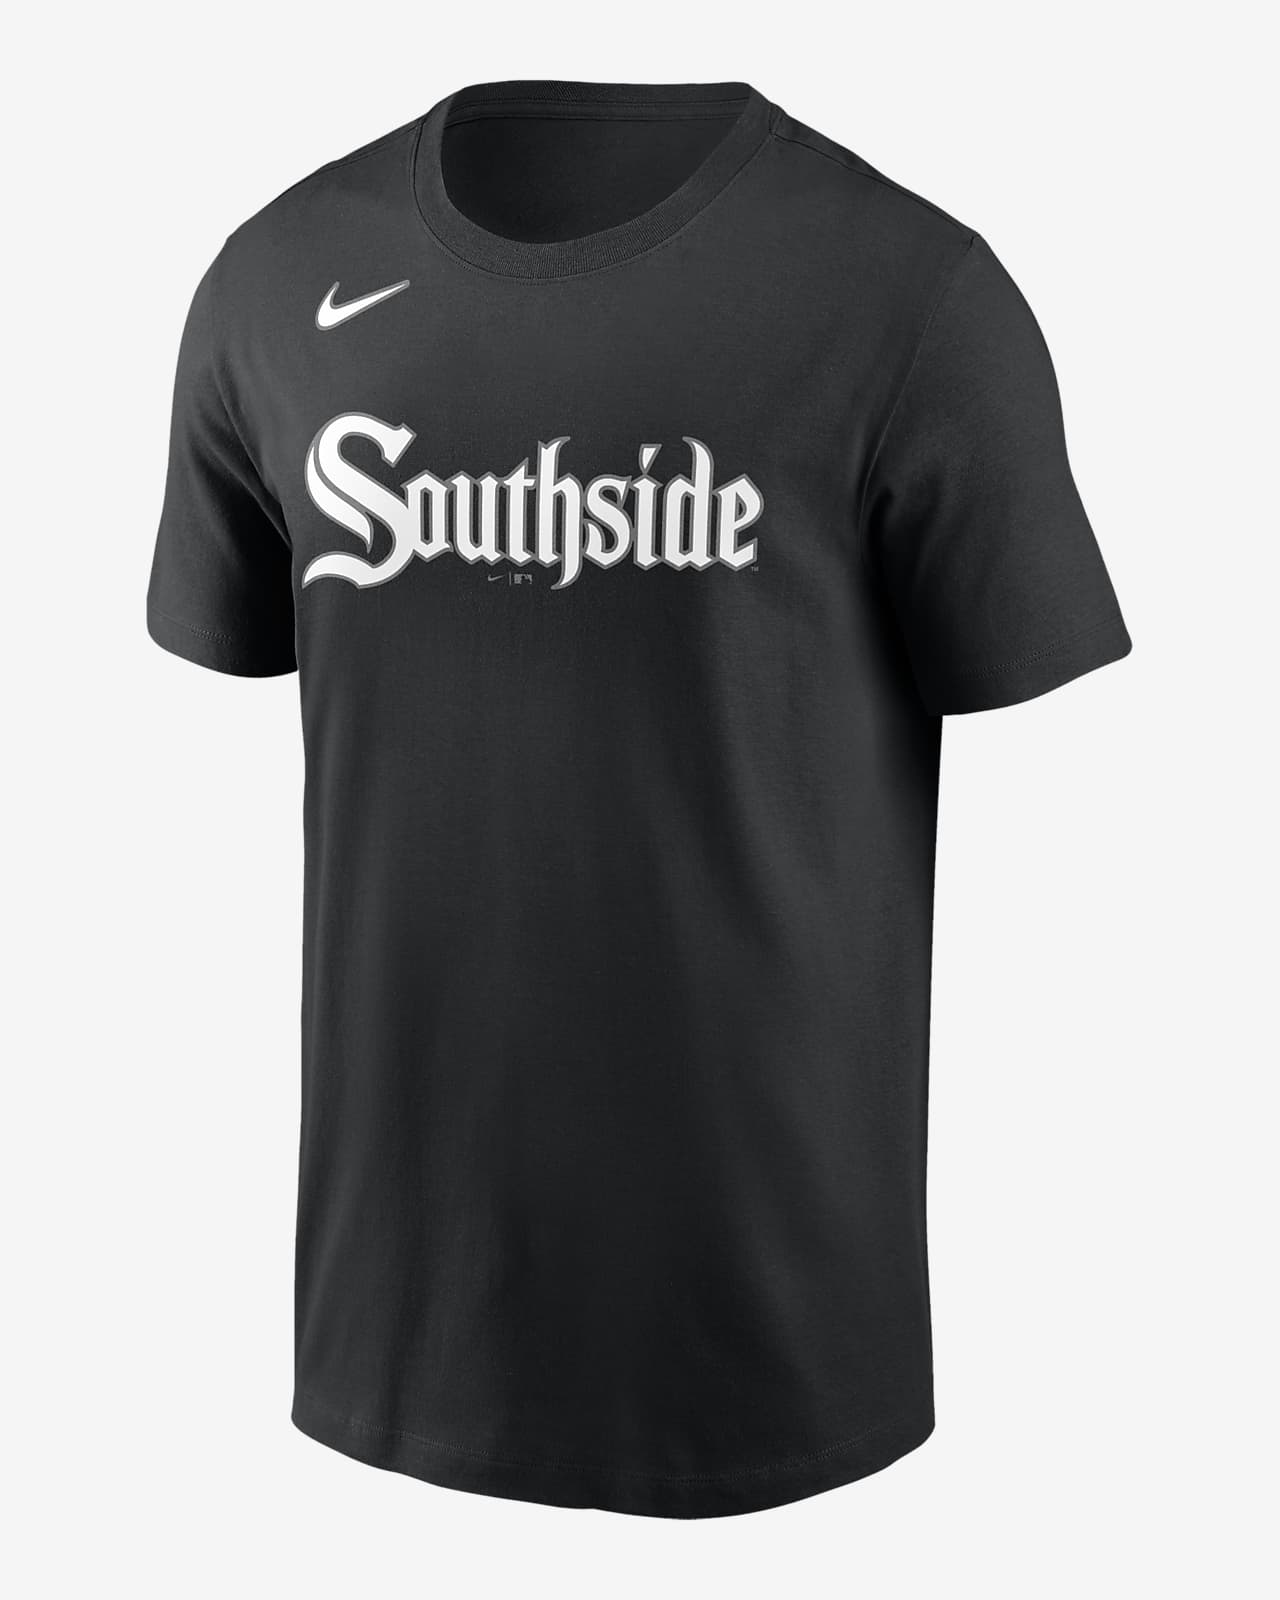 southside shirt white sox